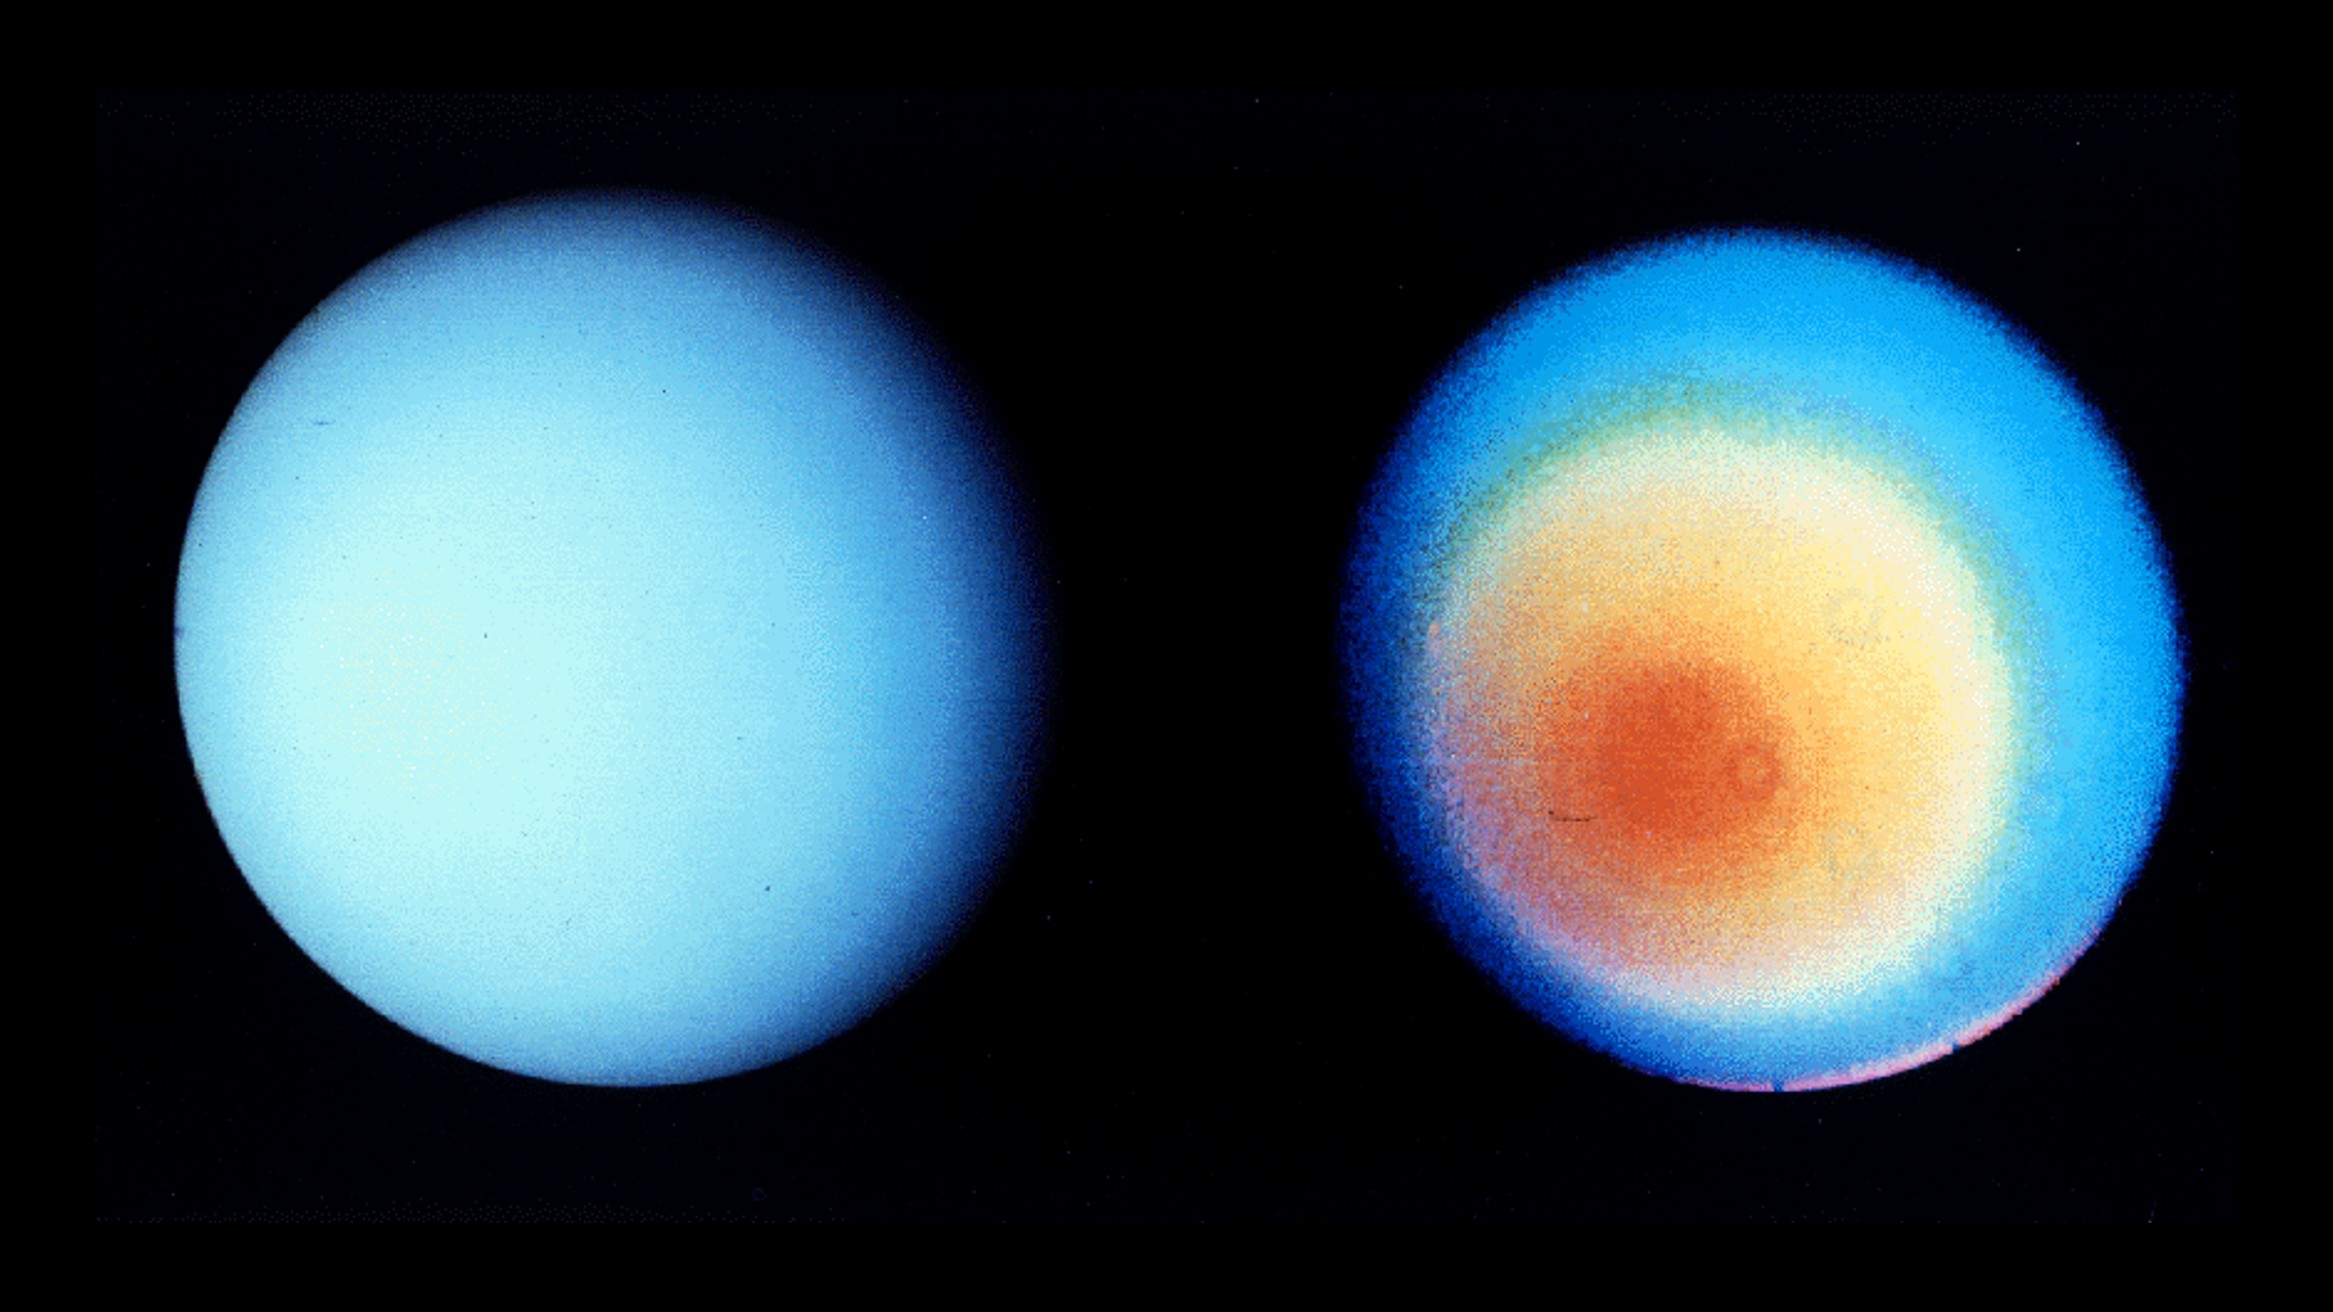 A Voyager 2 image of Uranus